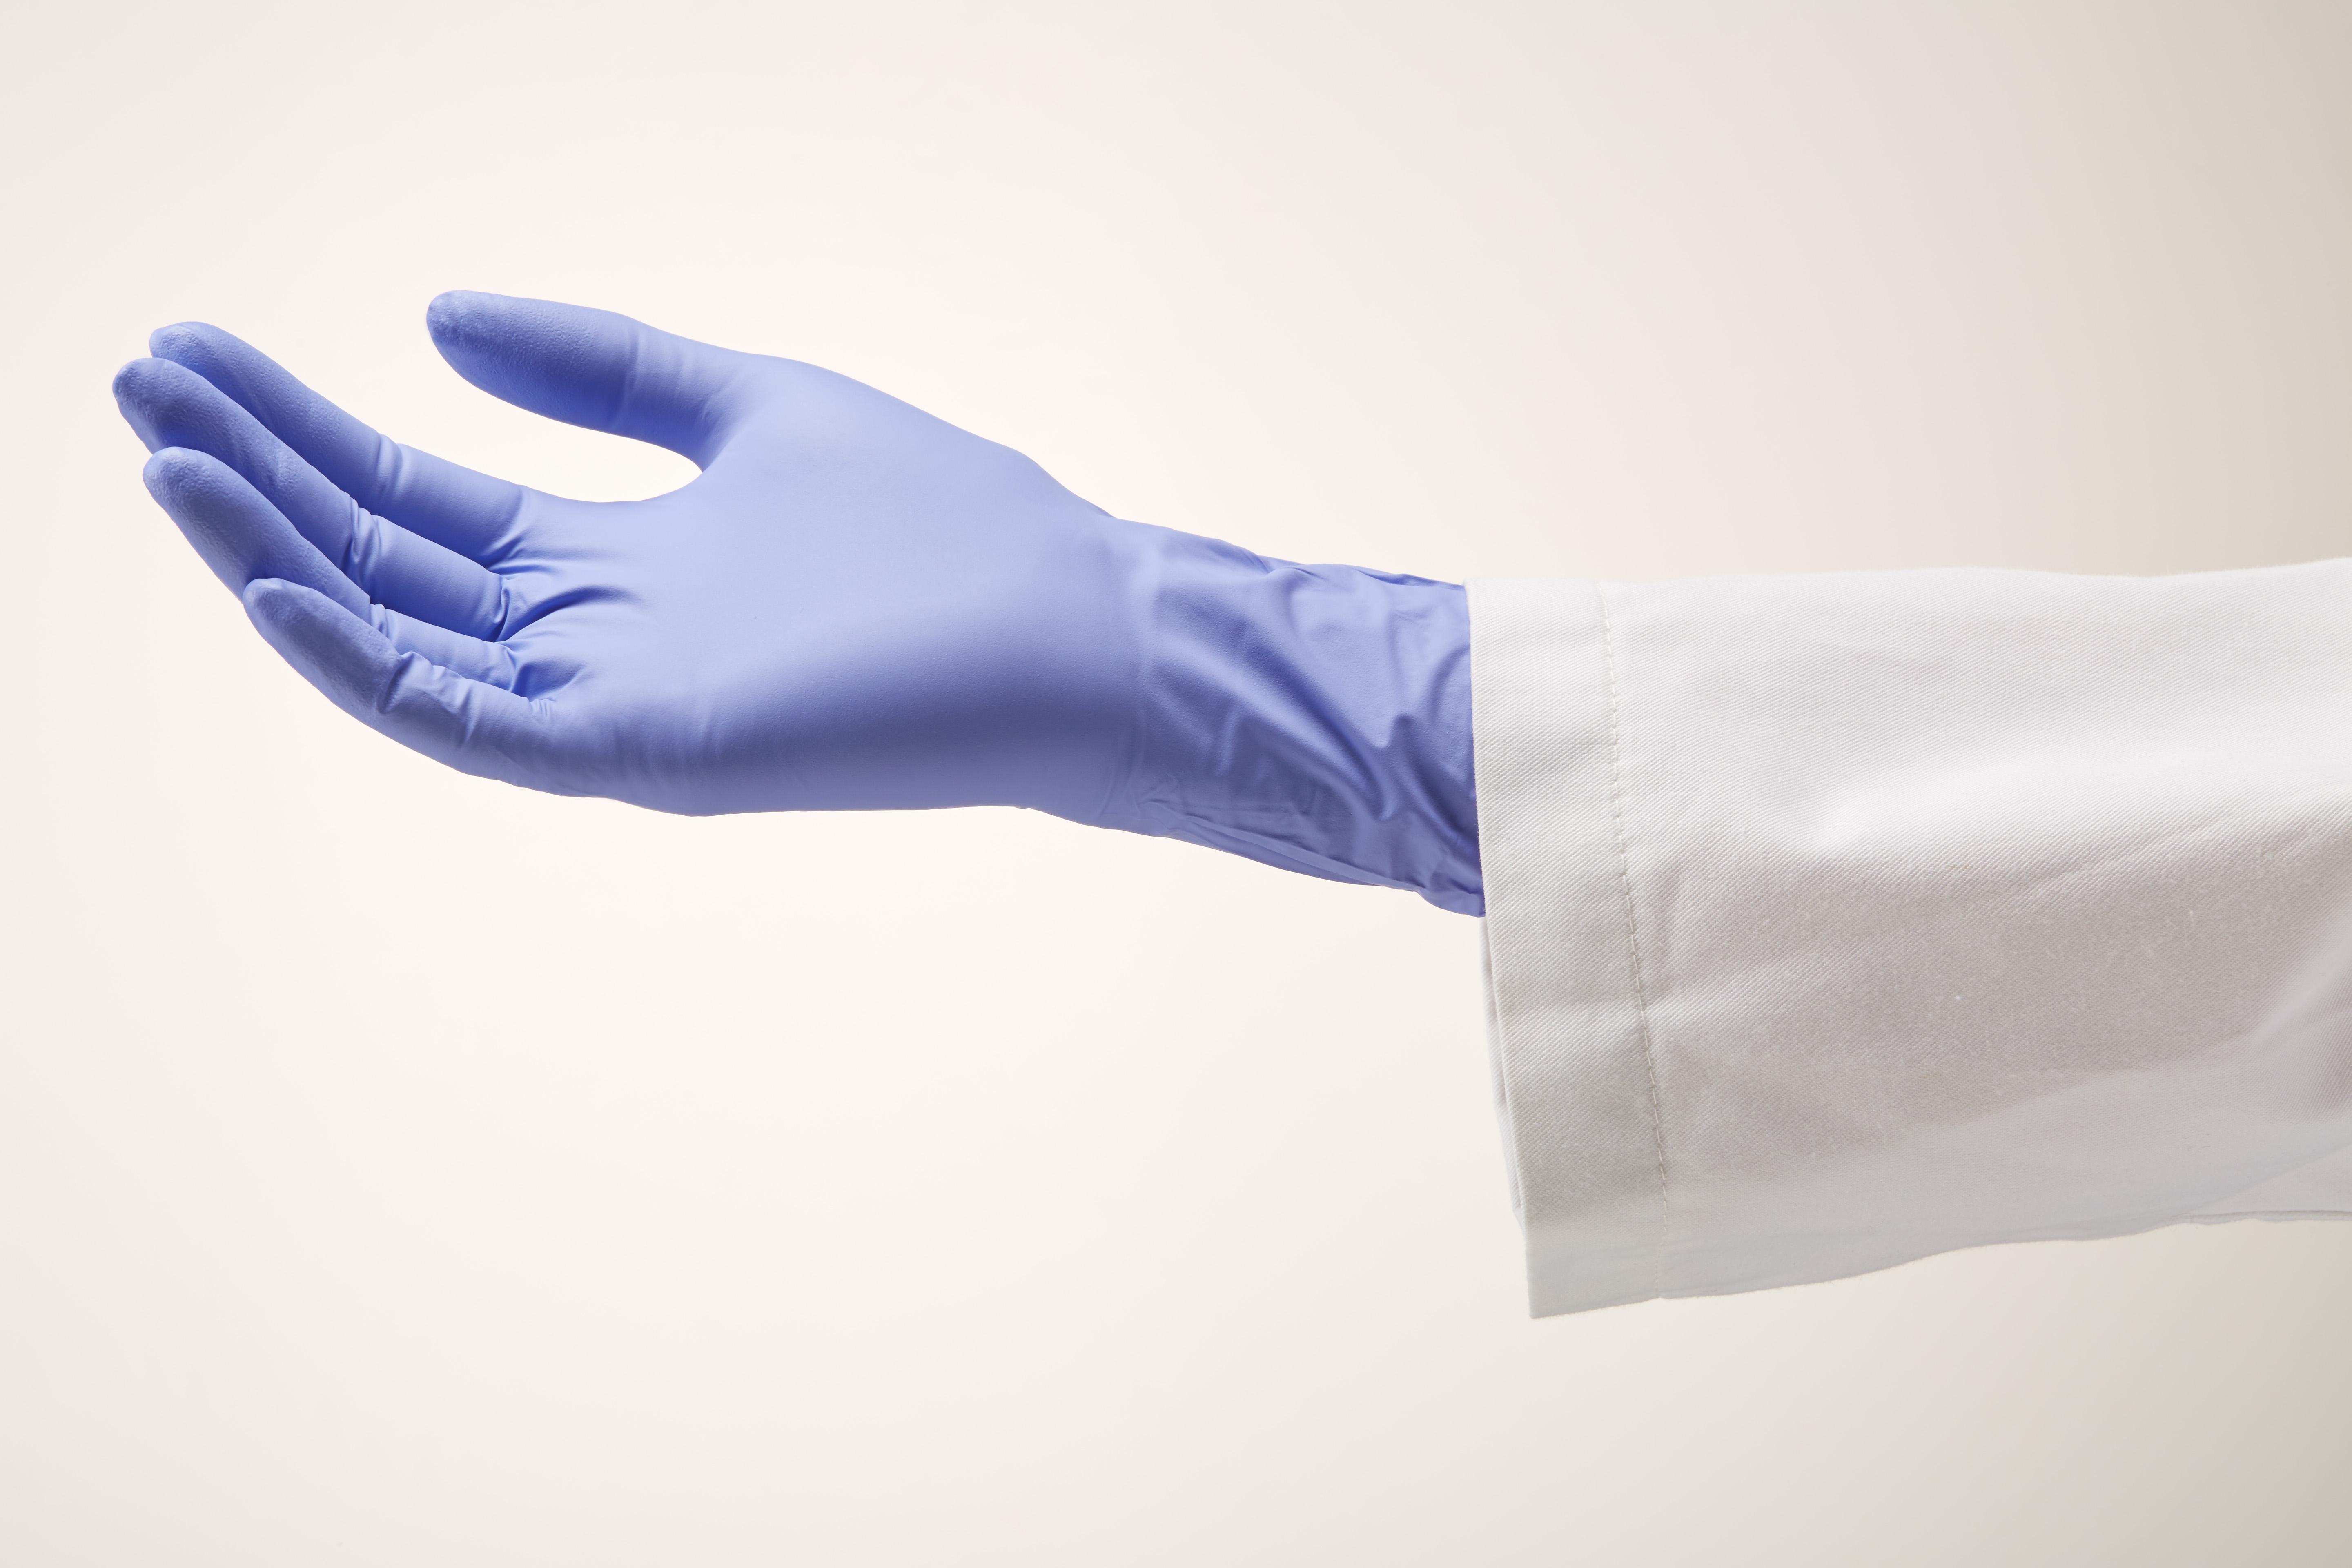  StarGuard PROTECT Nitrile Gloves, Powder Free, Violet-Blue, Size XS, Pk/ 10 x 100 gloves.